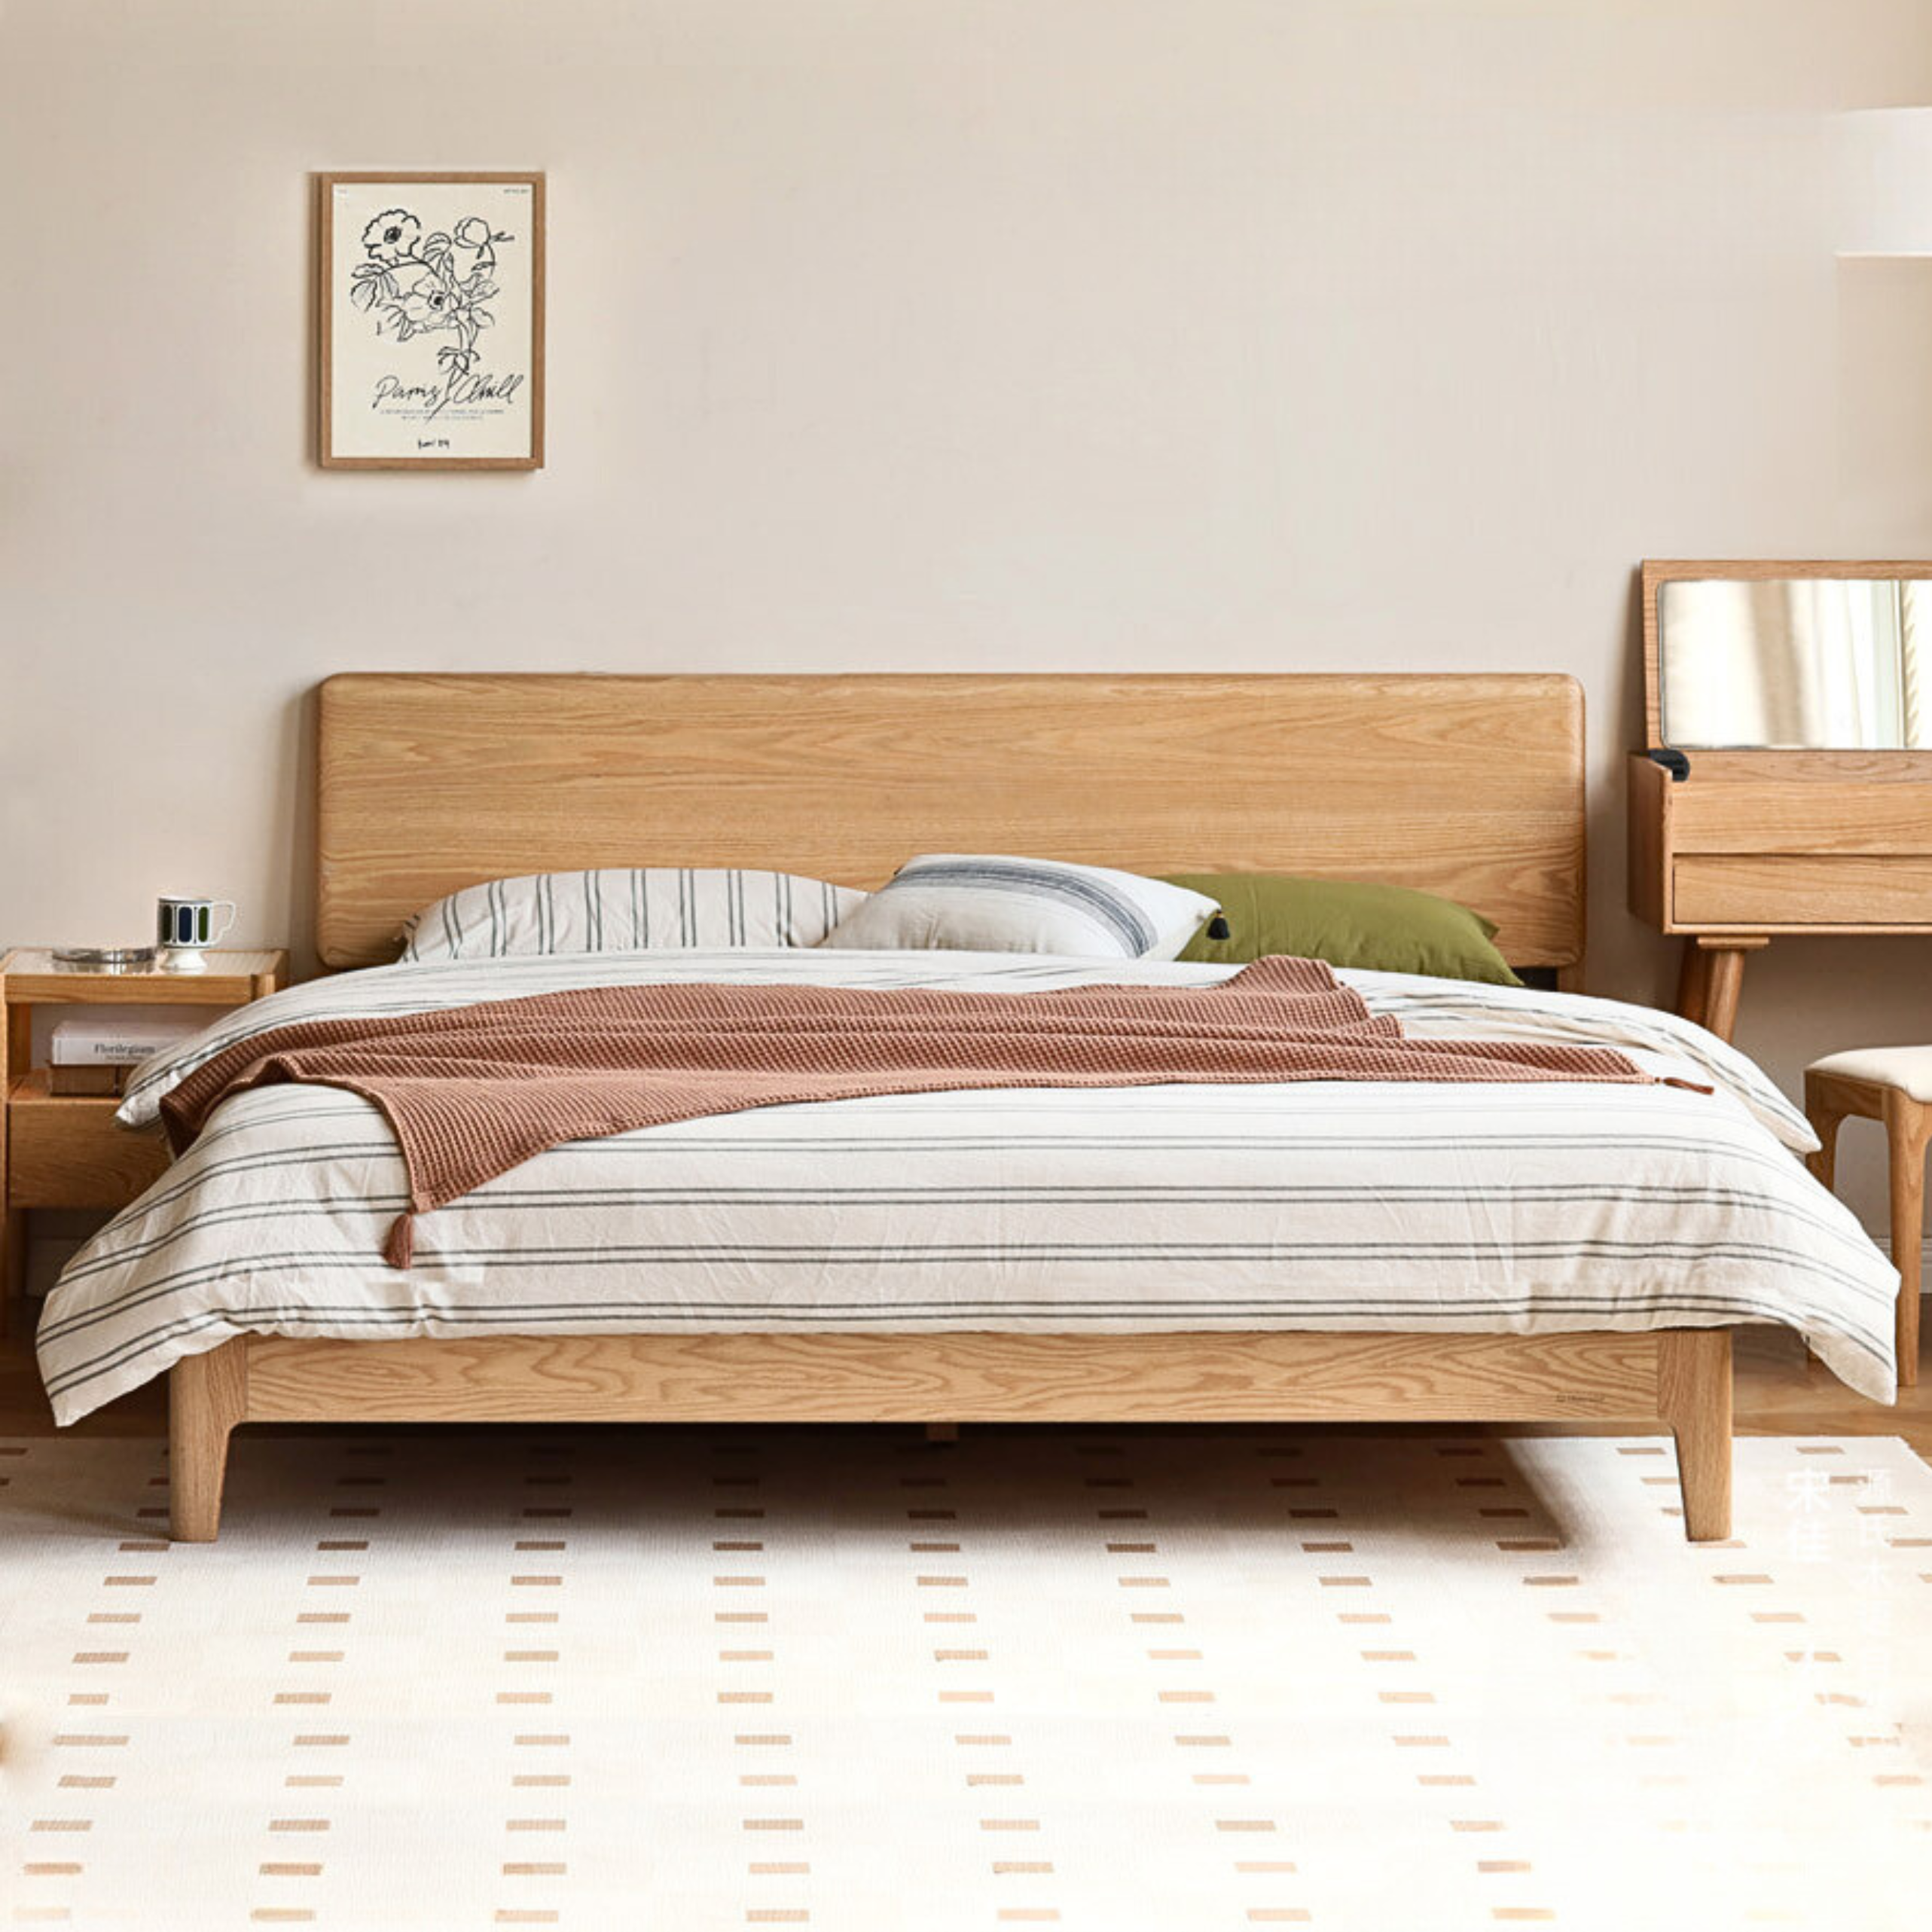 Oak solid wood bed "